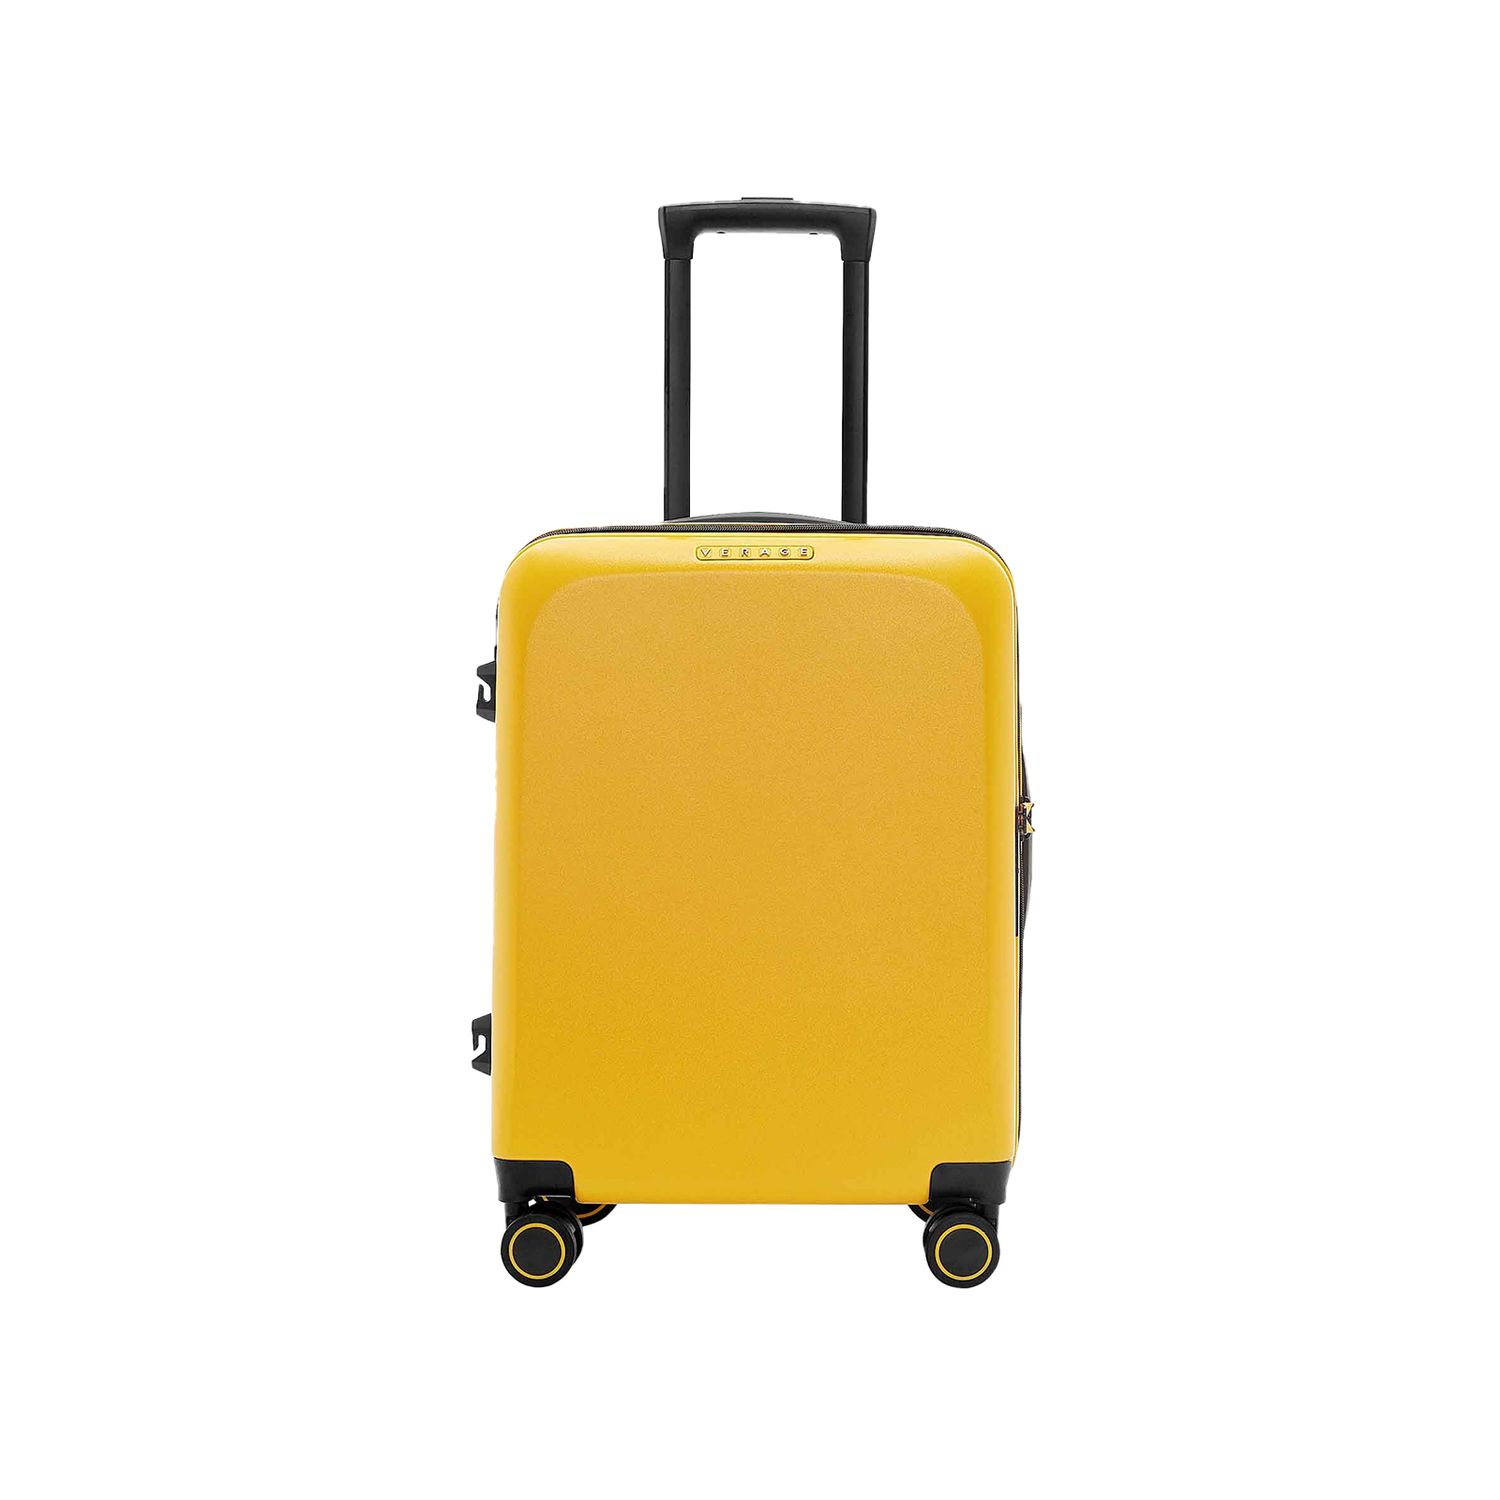 Hard shell suitcase yellow